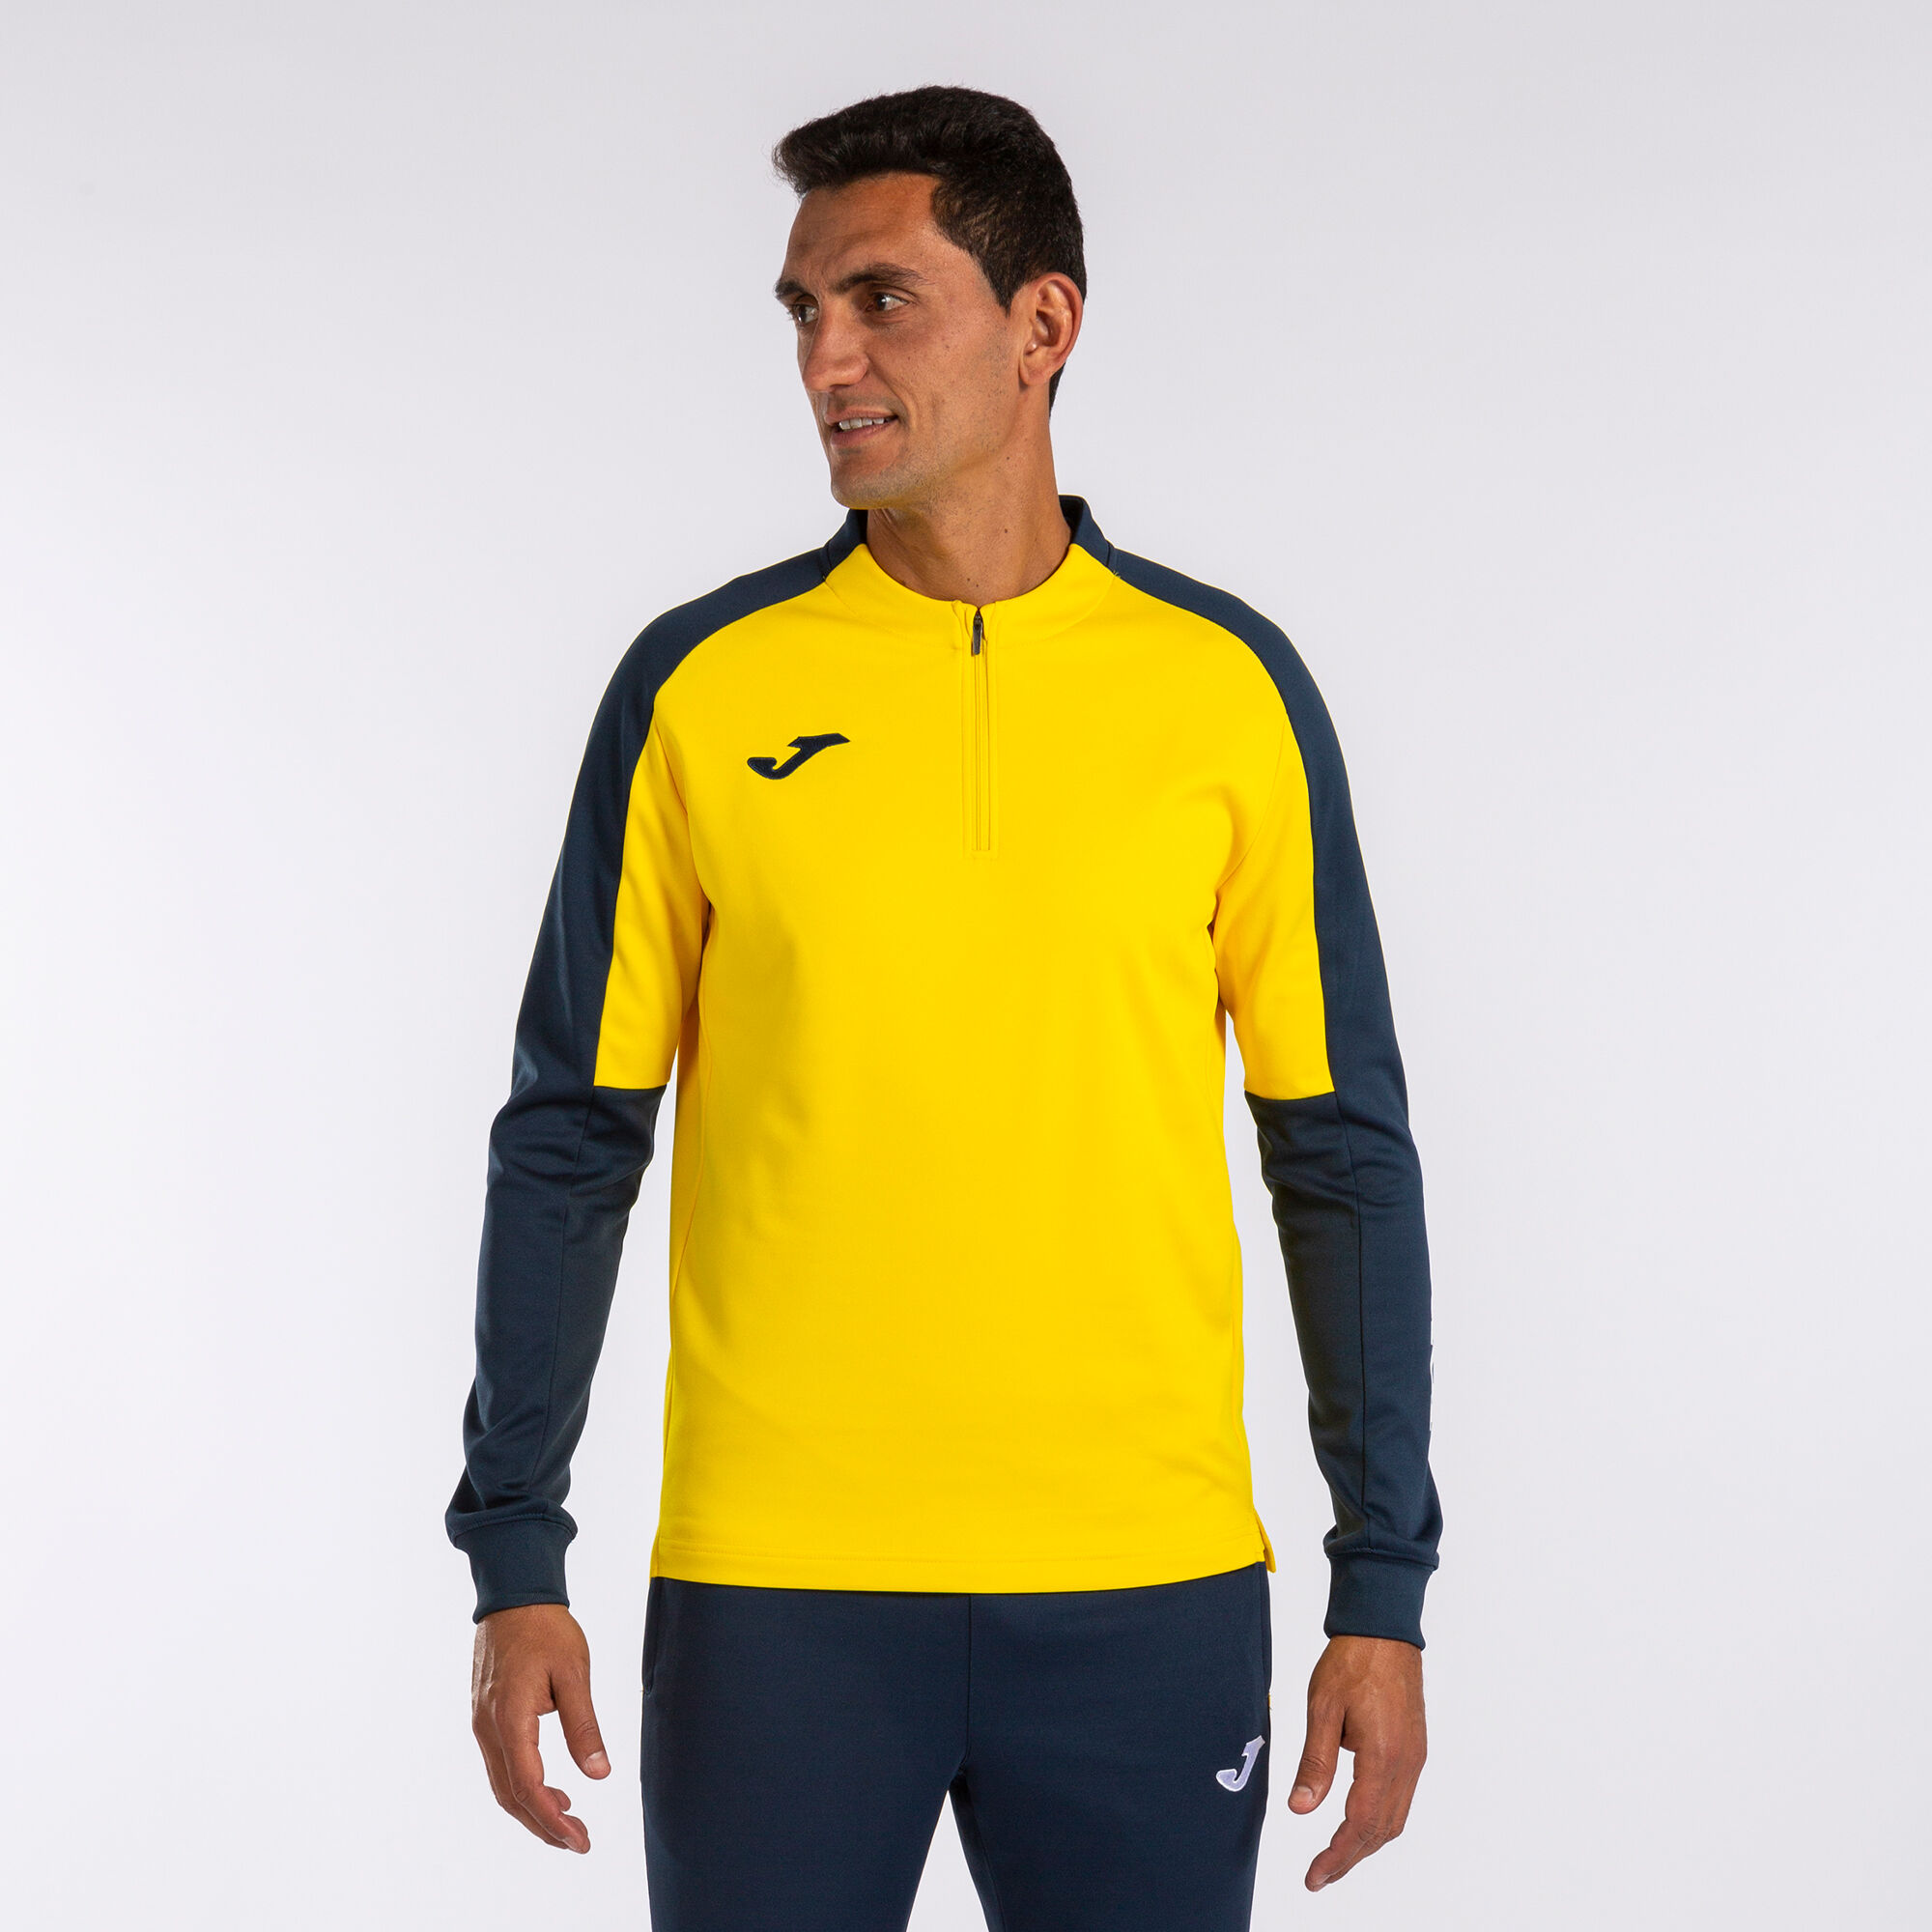 Sweat-shirt homme Eco Championship jaune bleu marine